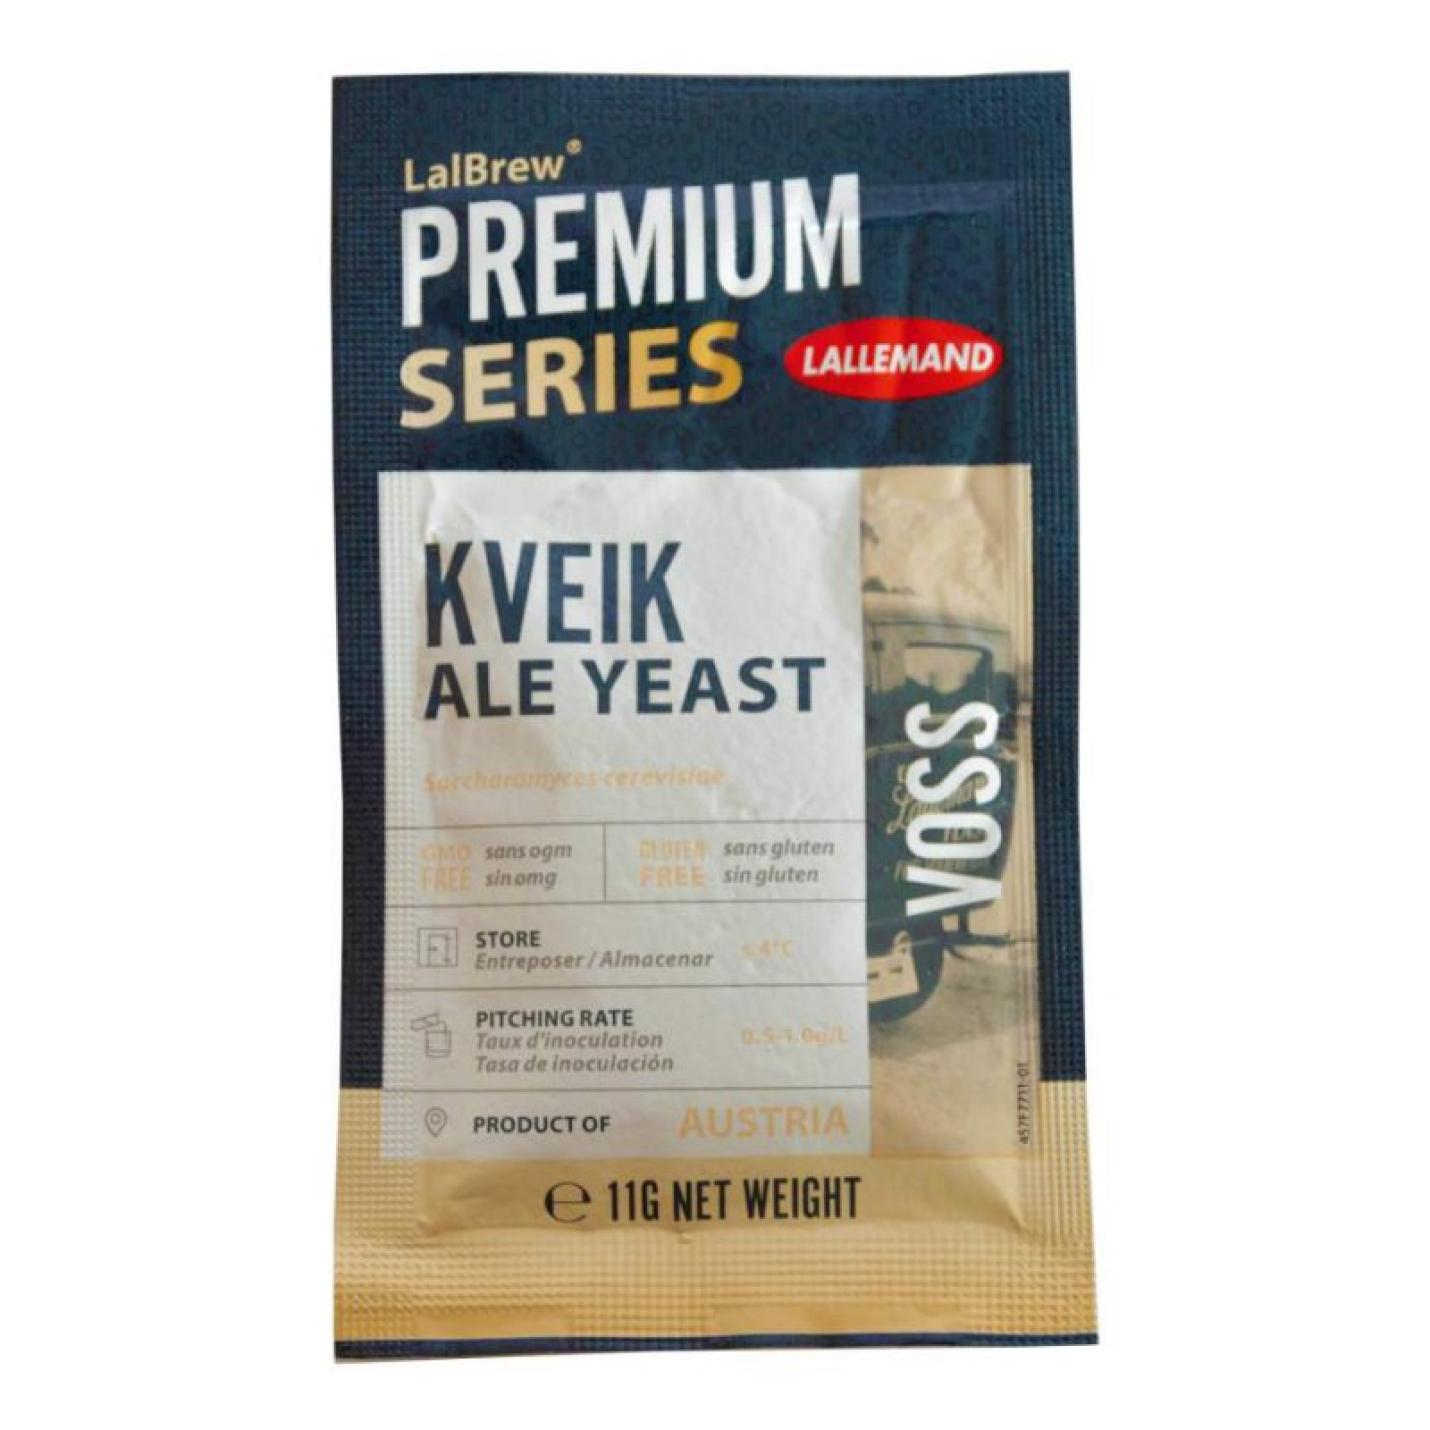 KVEIK ale yeast Lallemand premium series 11g